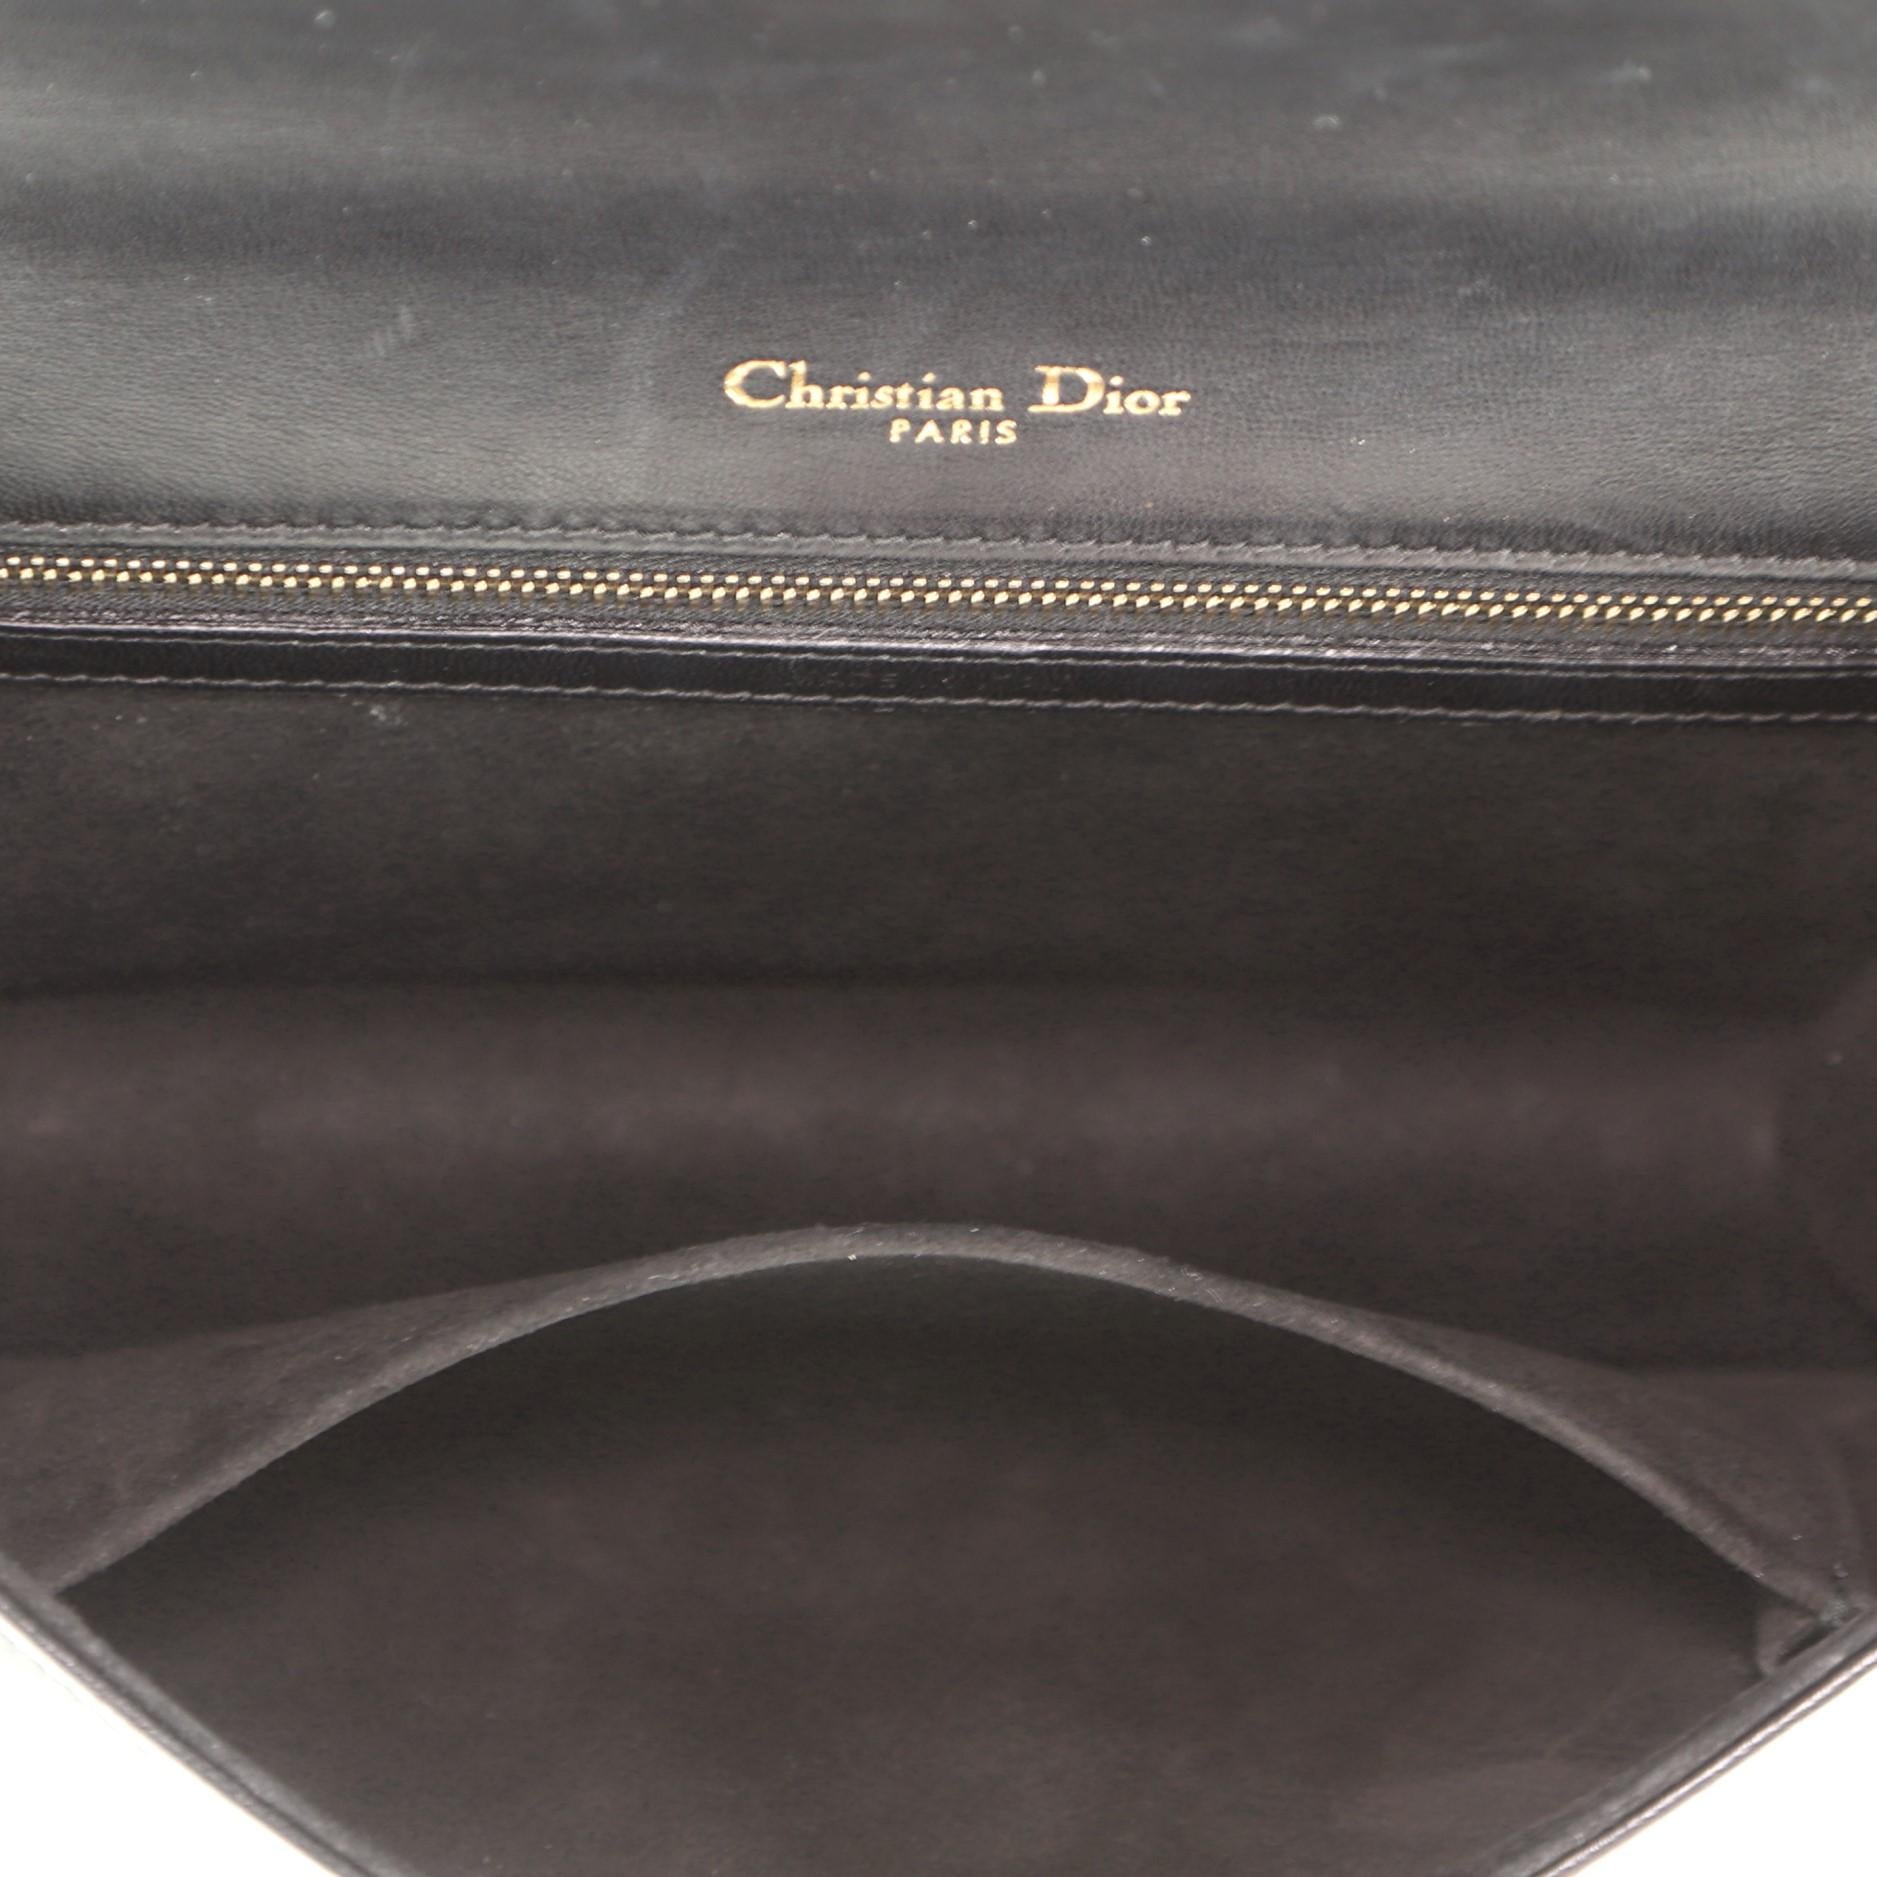 Black Christian Dior Diorama Flap Bag Studded Leather Medium